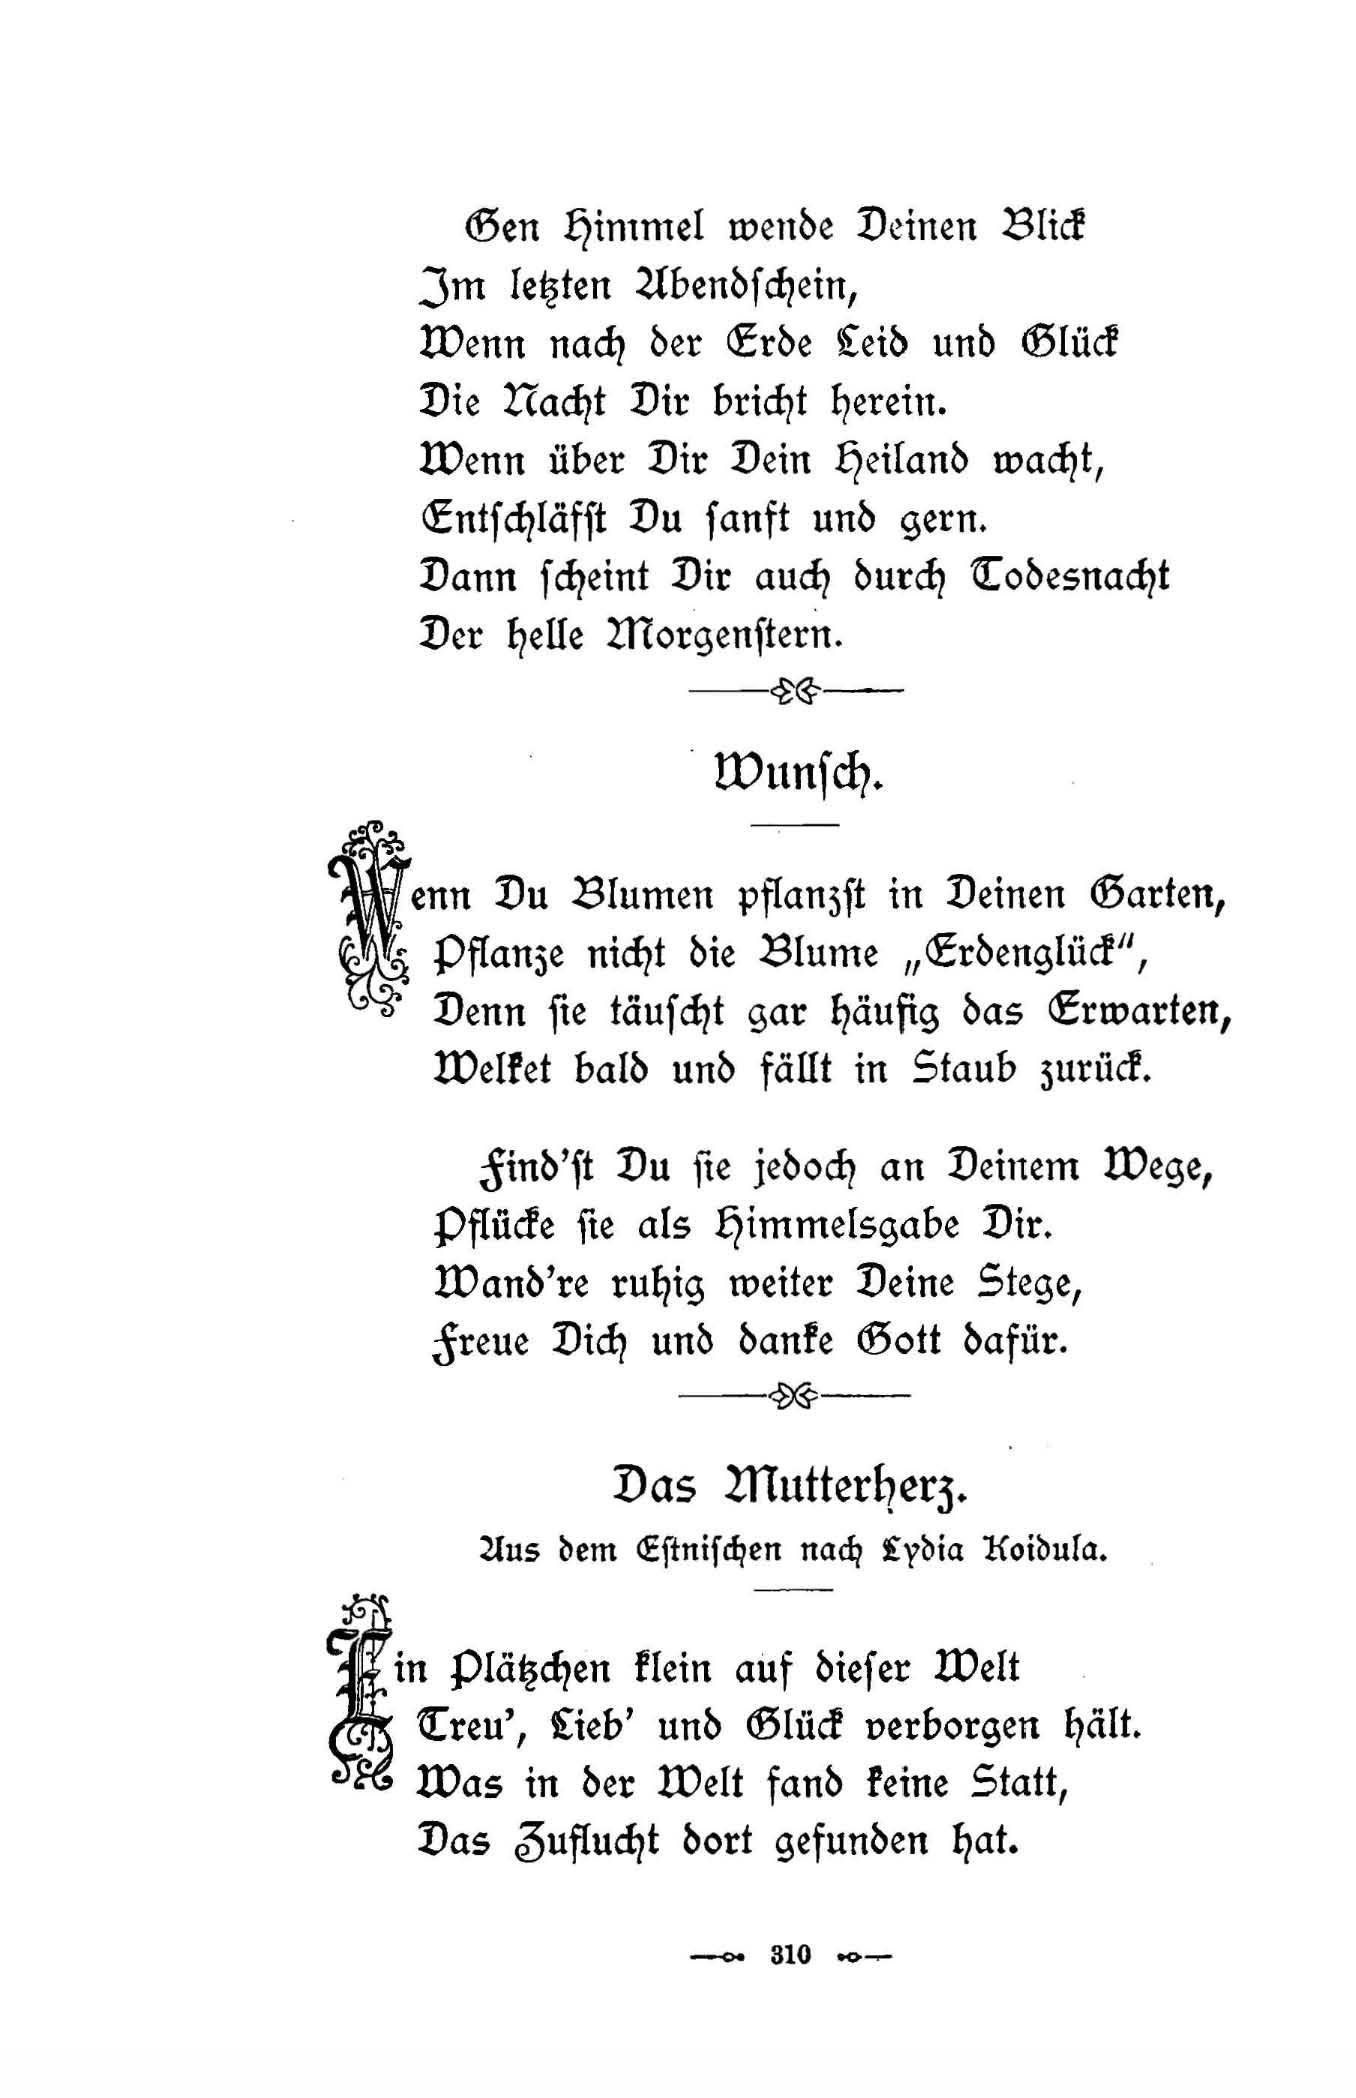 Wunsch (1896) | 1. (310) Main body of text